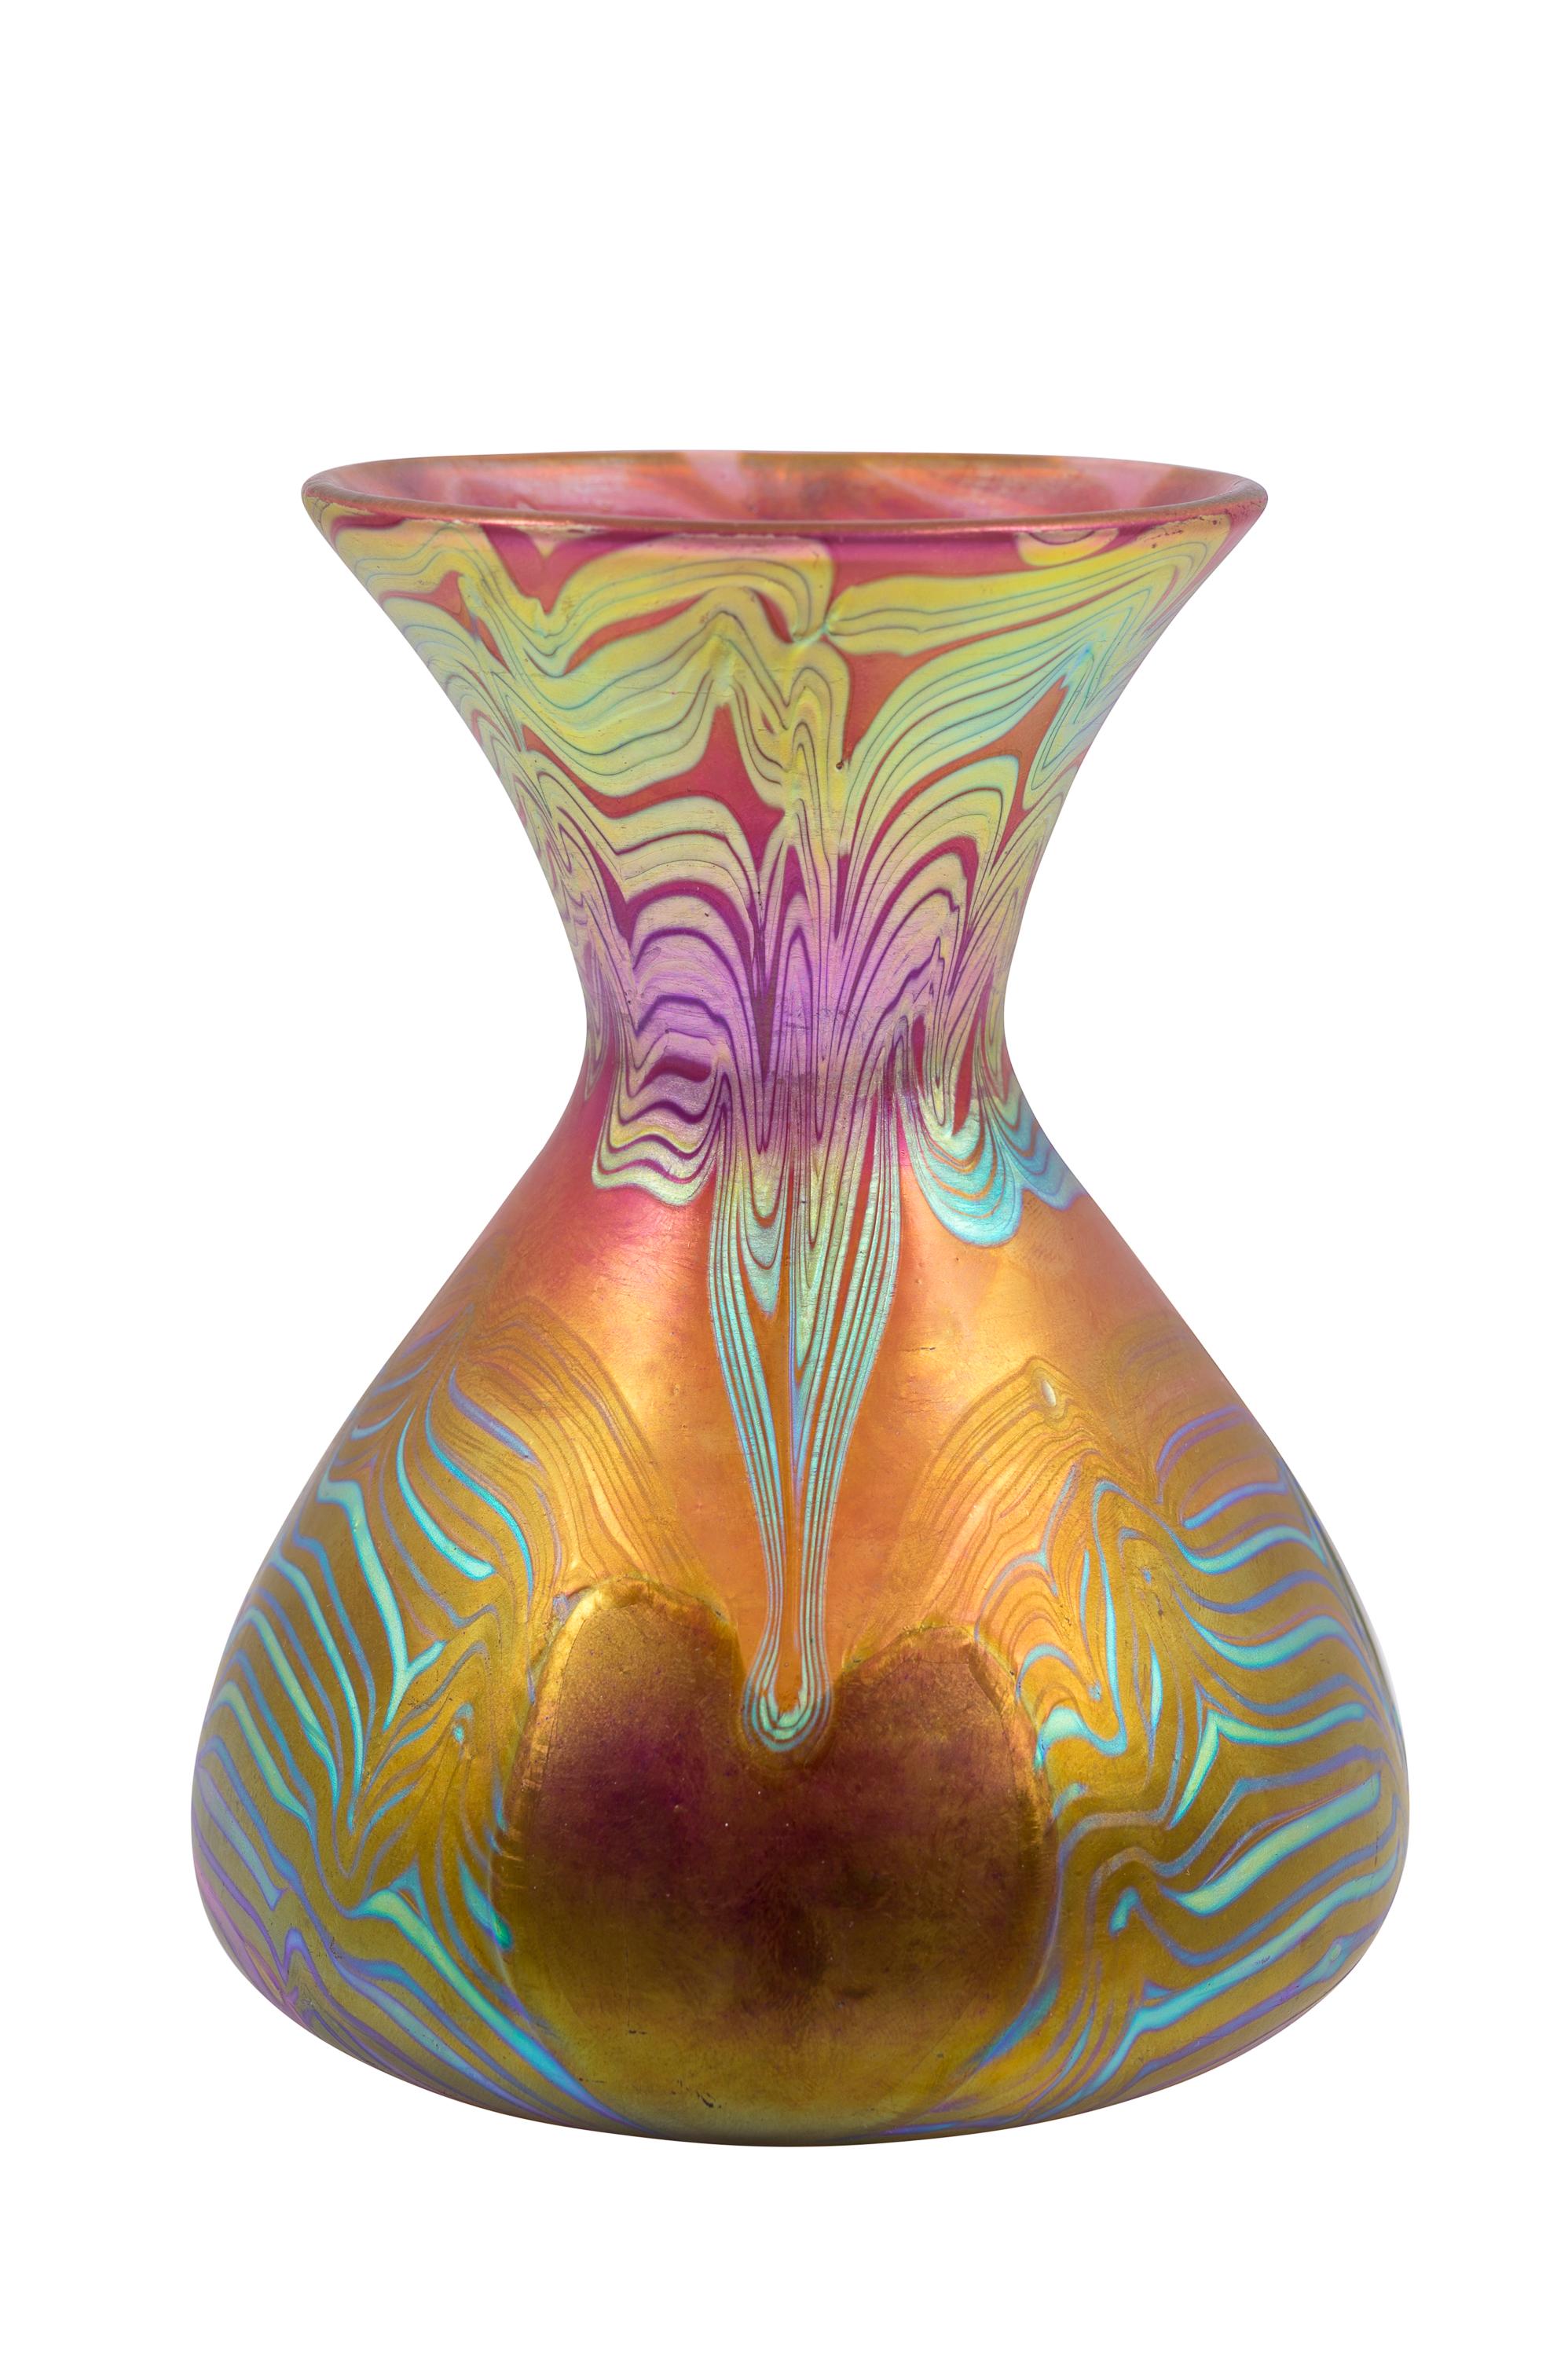 Glass vase, manufactured by Johann Loetz Witwe, PG 3/492 decoration, production number II/963, ca. 1903, Bohemia, Art Nouveau, Jugendstil, Art Deco, art glass, iridescent glass, pink, orange, blue, silver, gold, violet, turquoise. 

Technique: